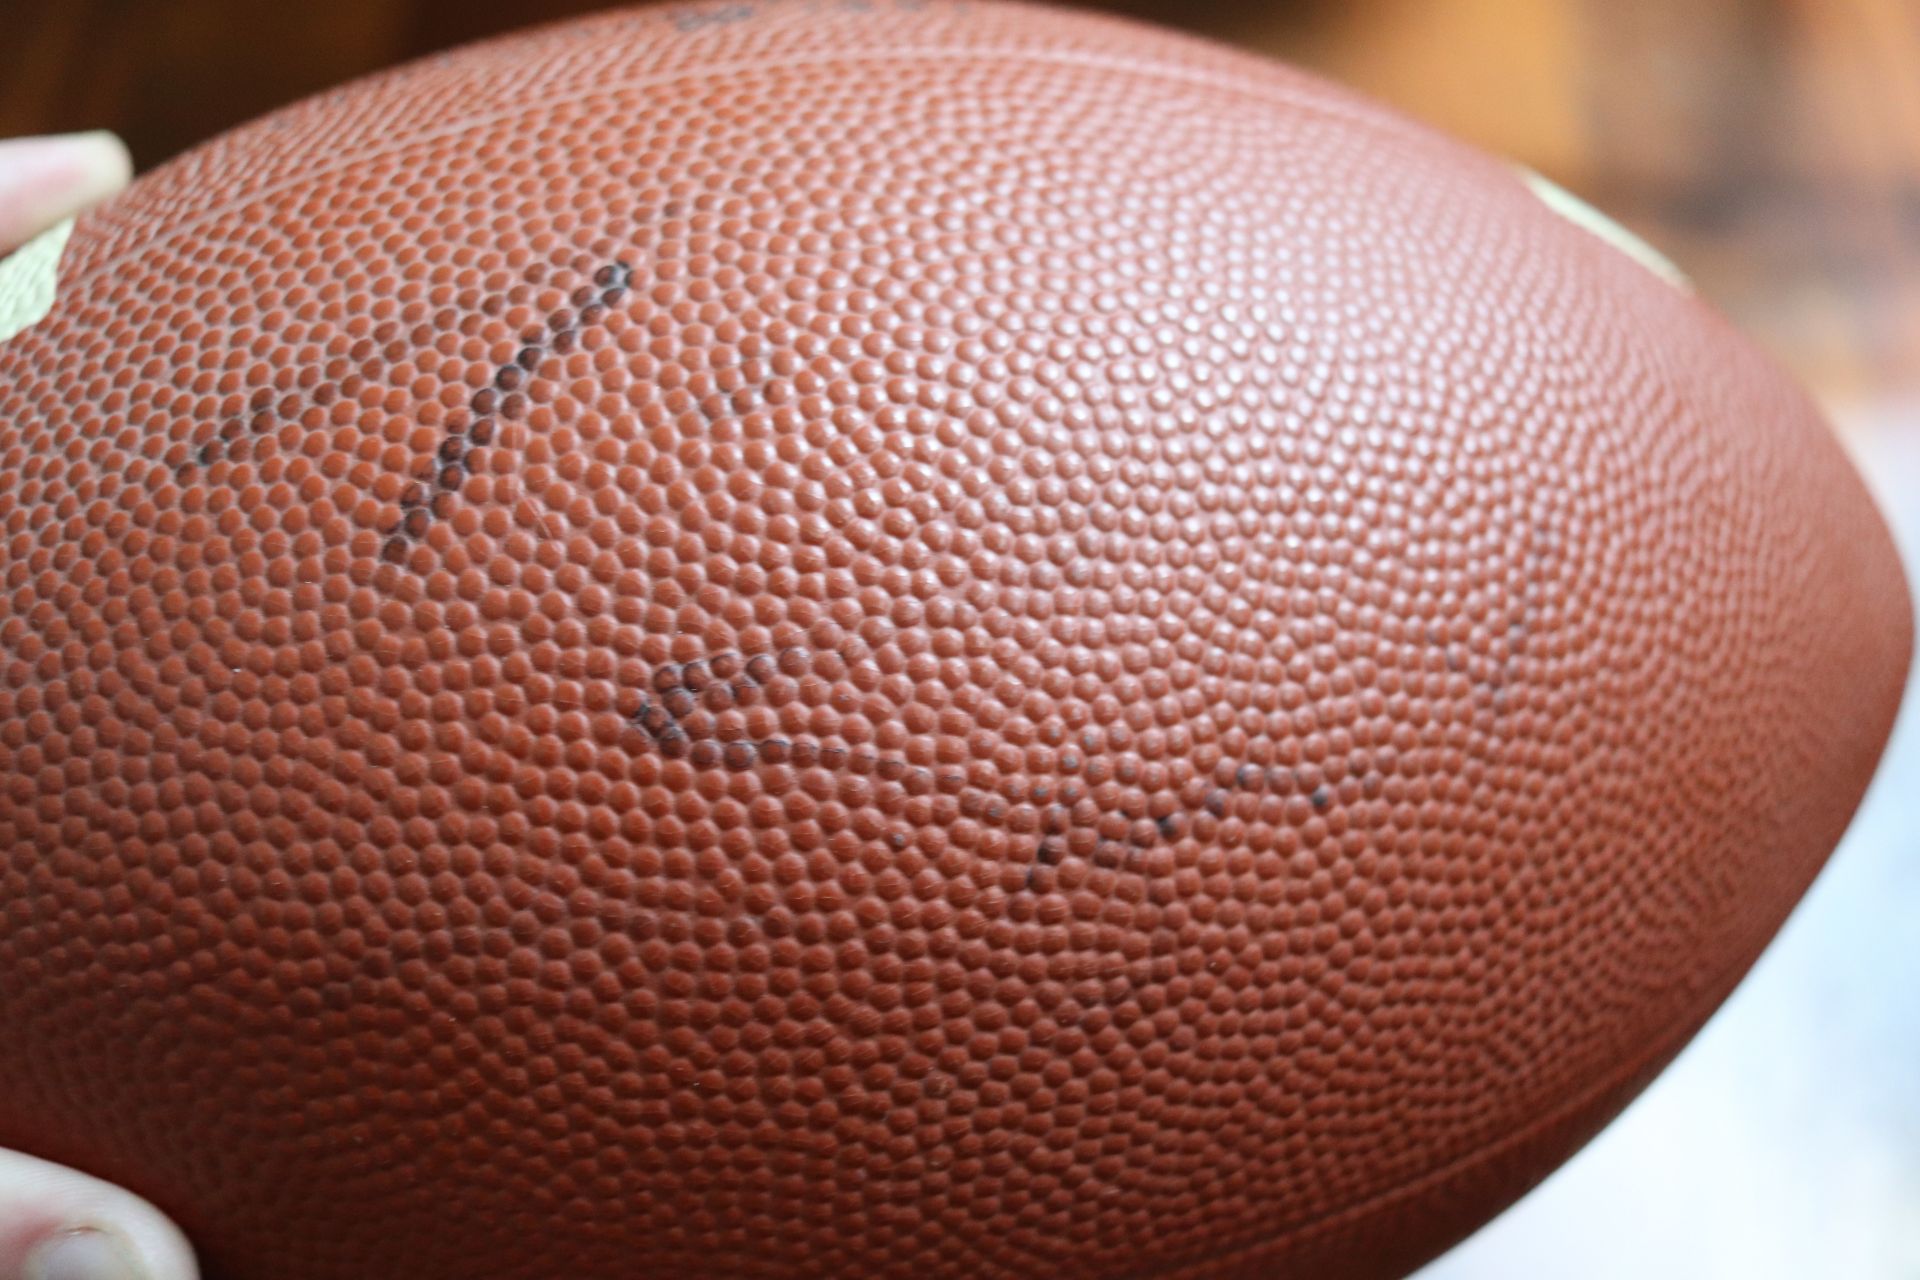 Autographed baseball, Jack Buckner, autographed ultra #1 golf ball and autographed football - Image 2 of 4